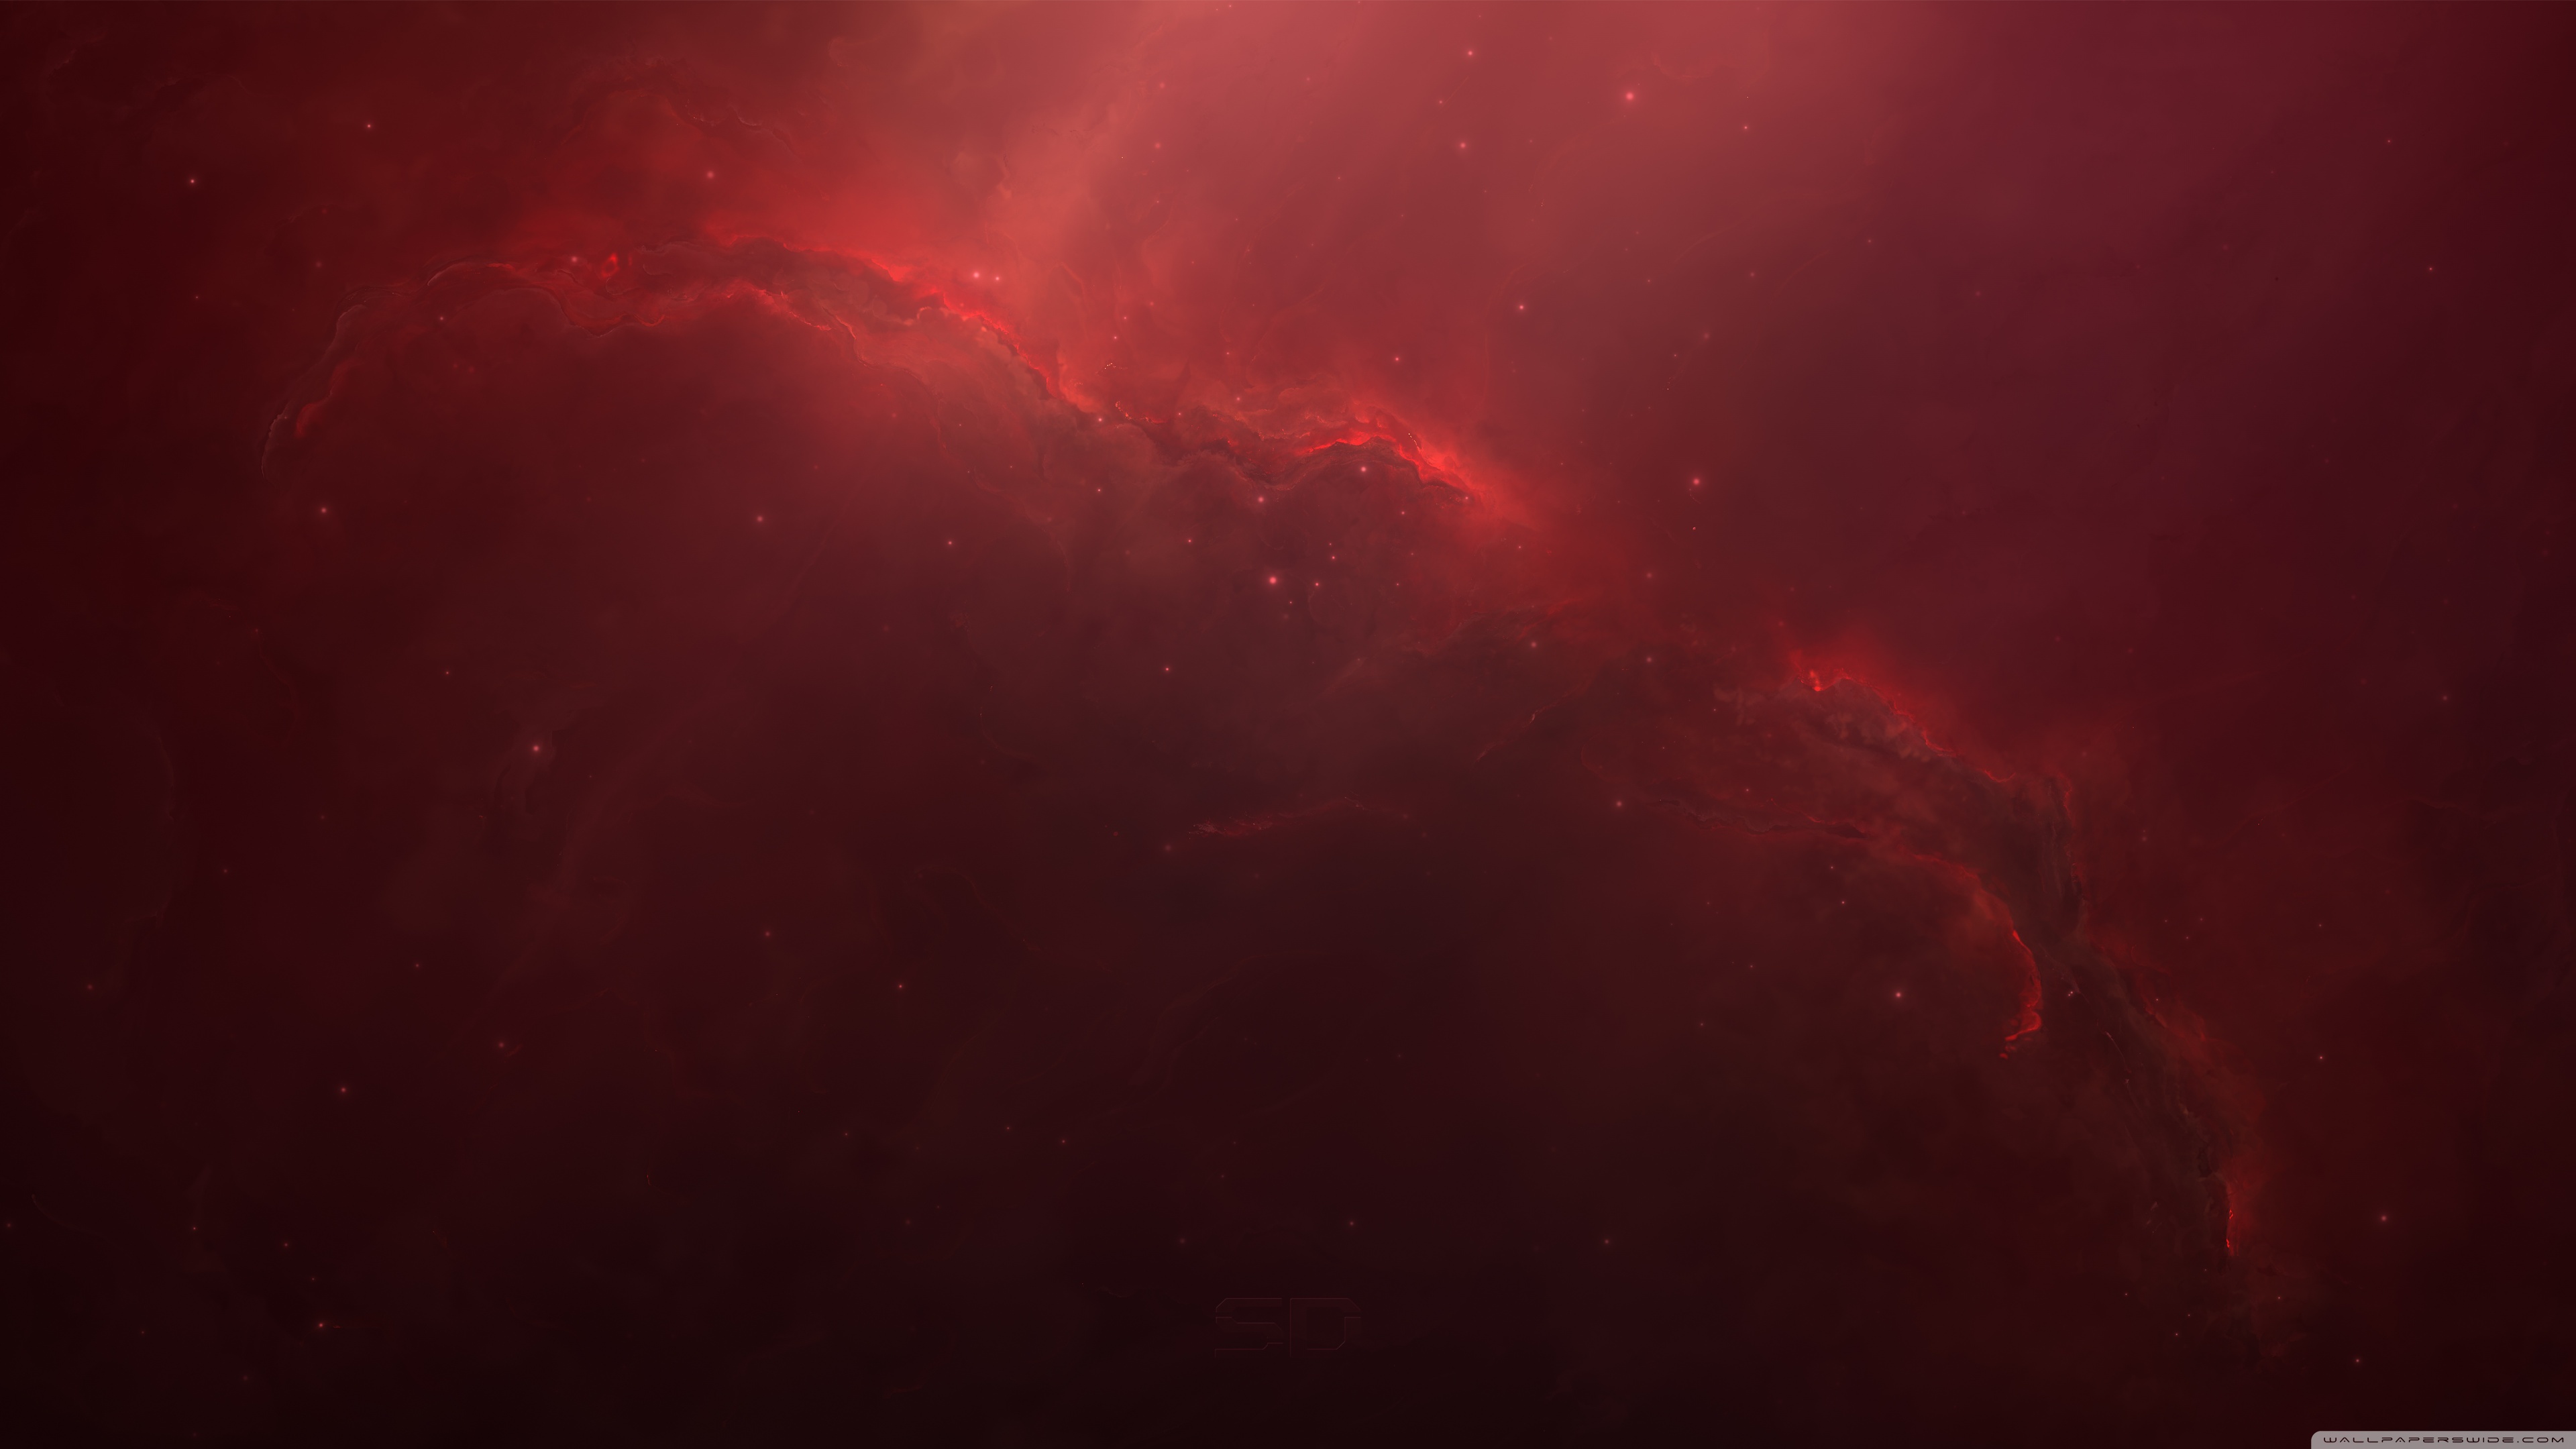 red nebula high resolution